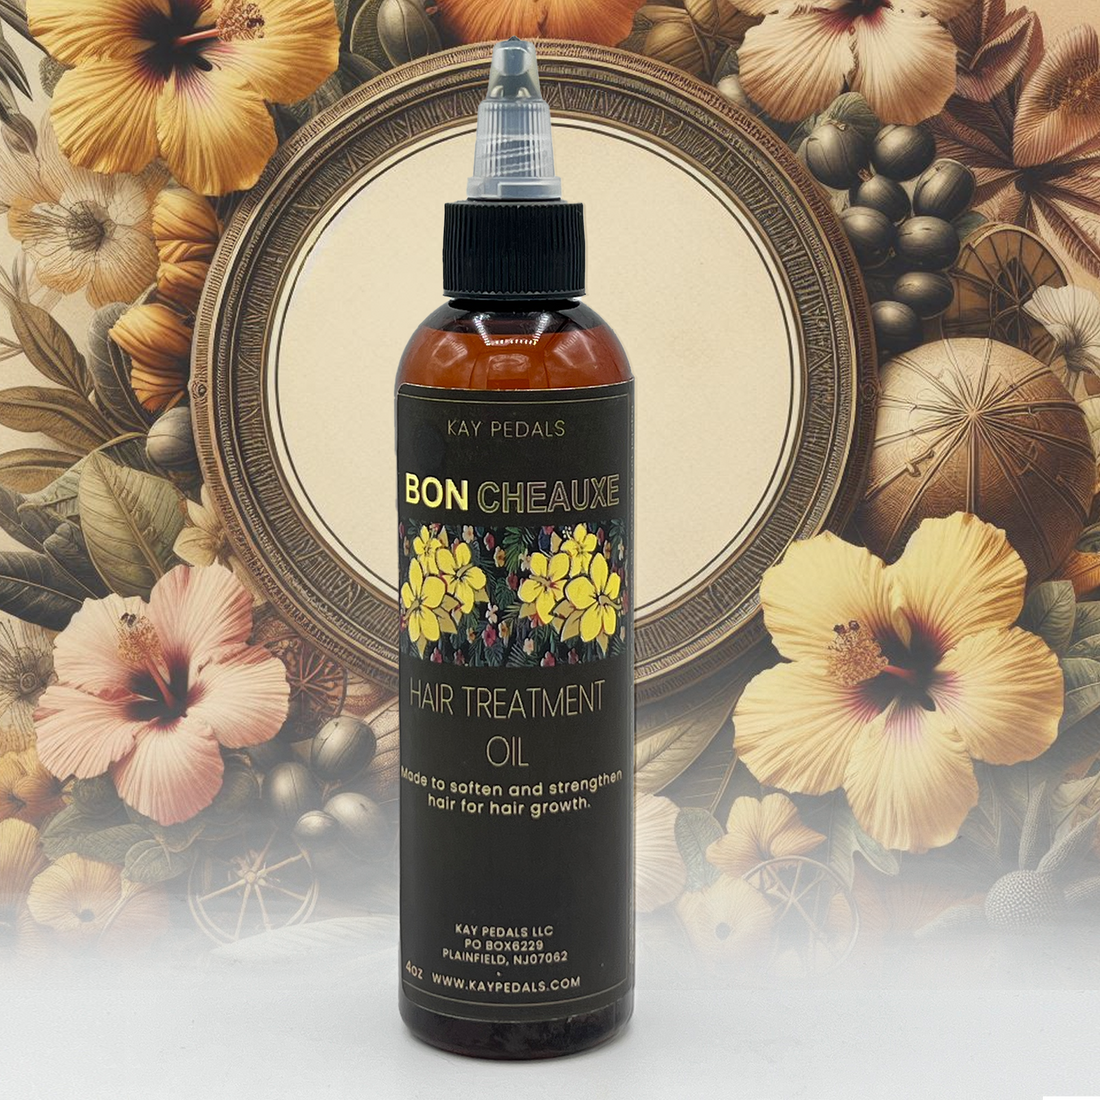 Bon Cheauxe Hair Treatment Oil | Hair Growth Oil |  4 oz bottle Kay Pedals